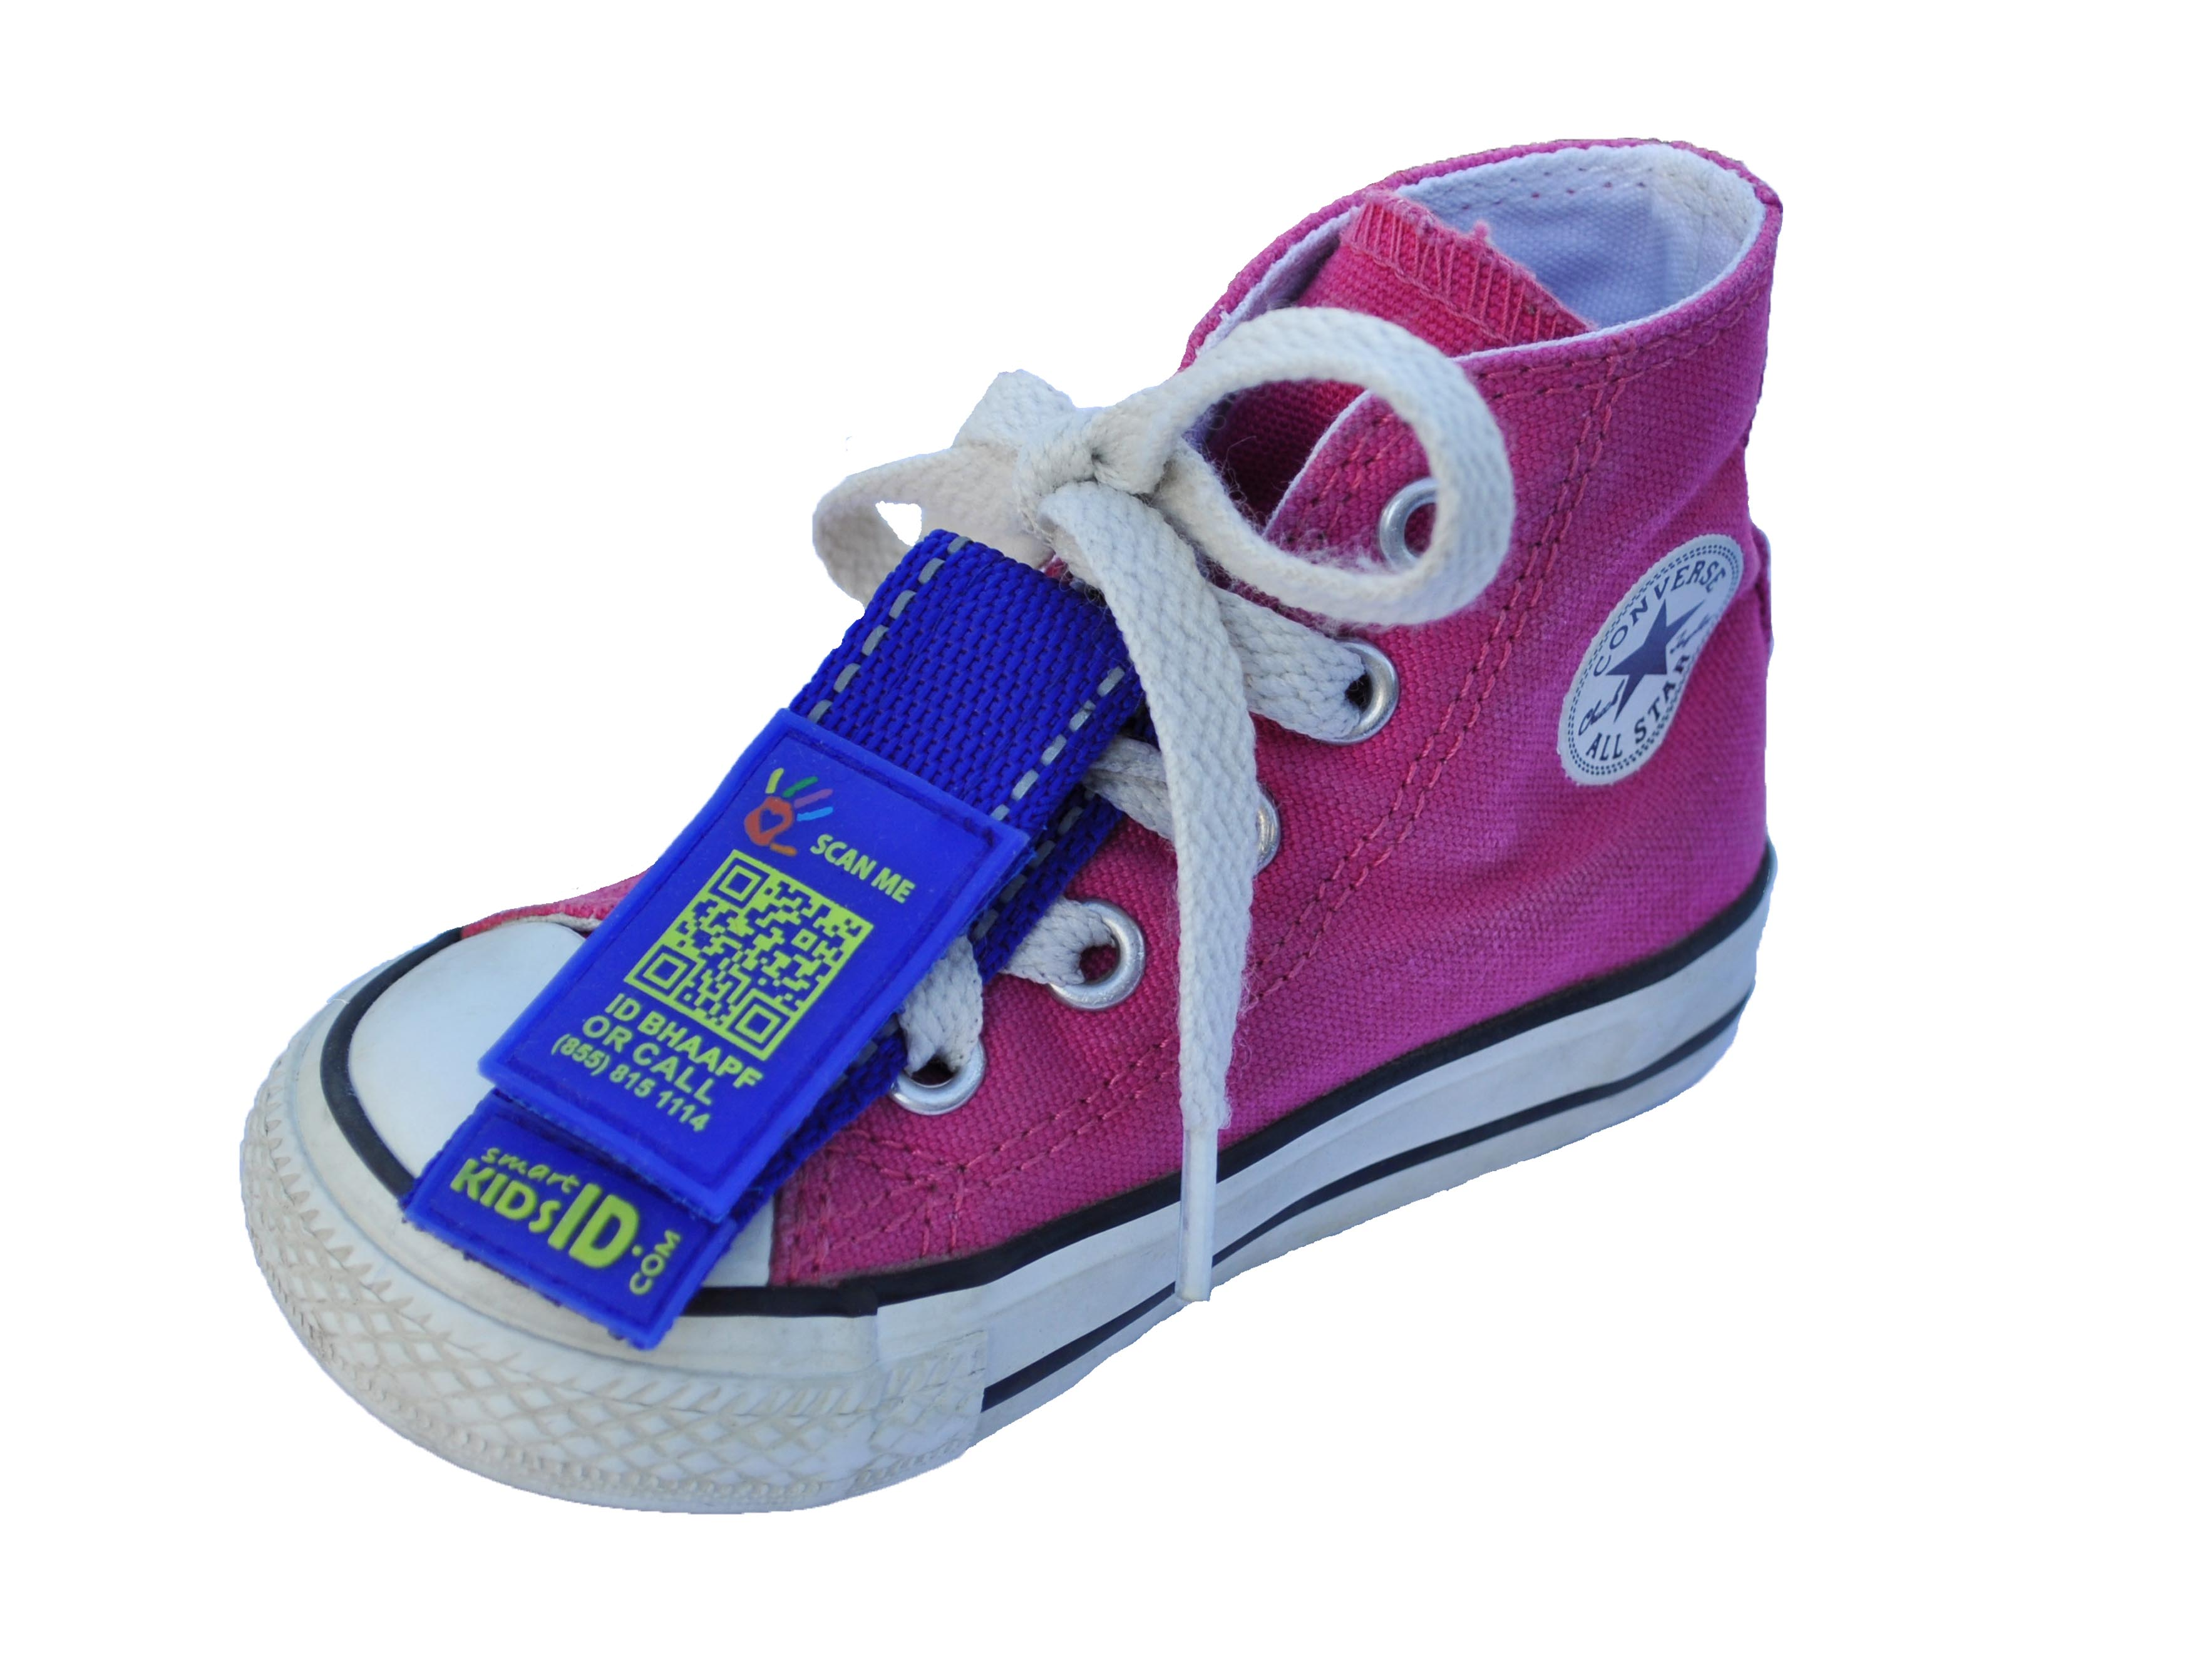 SmartKidsID Shoe ID Tag